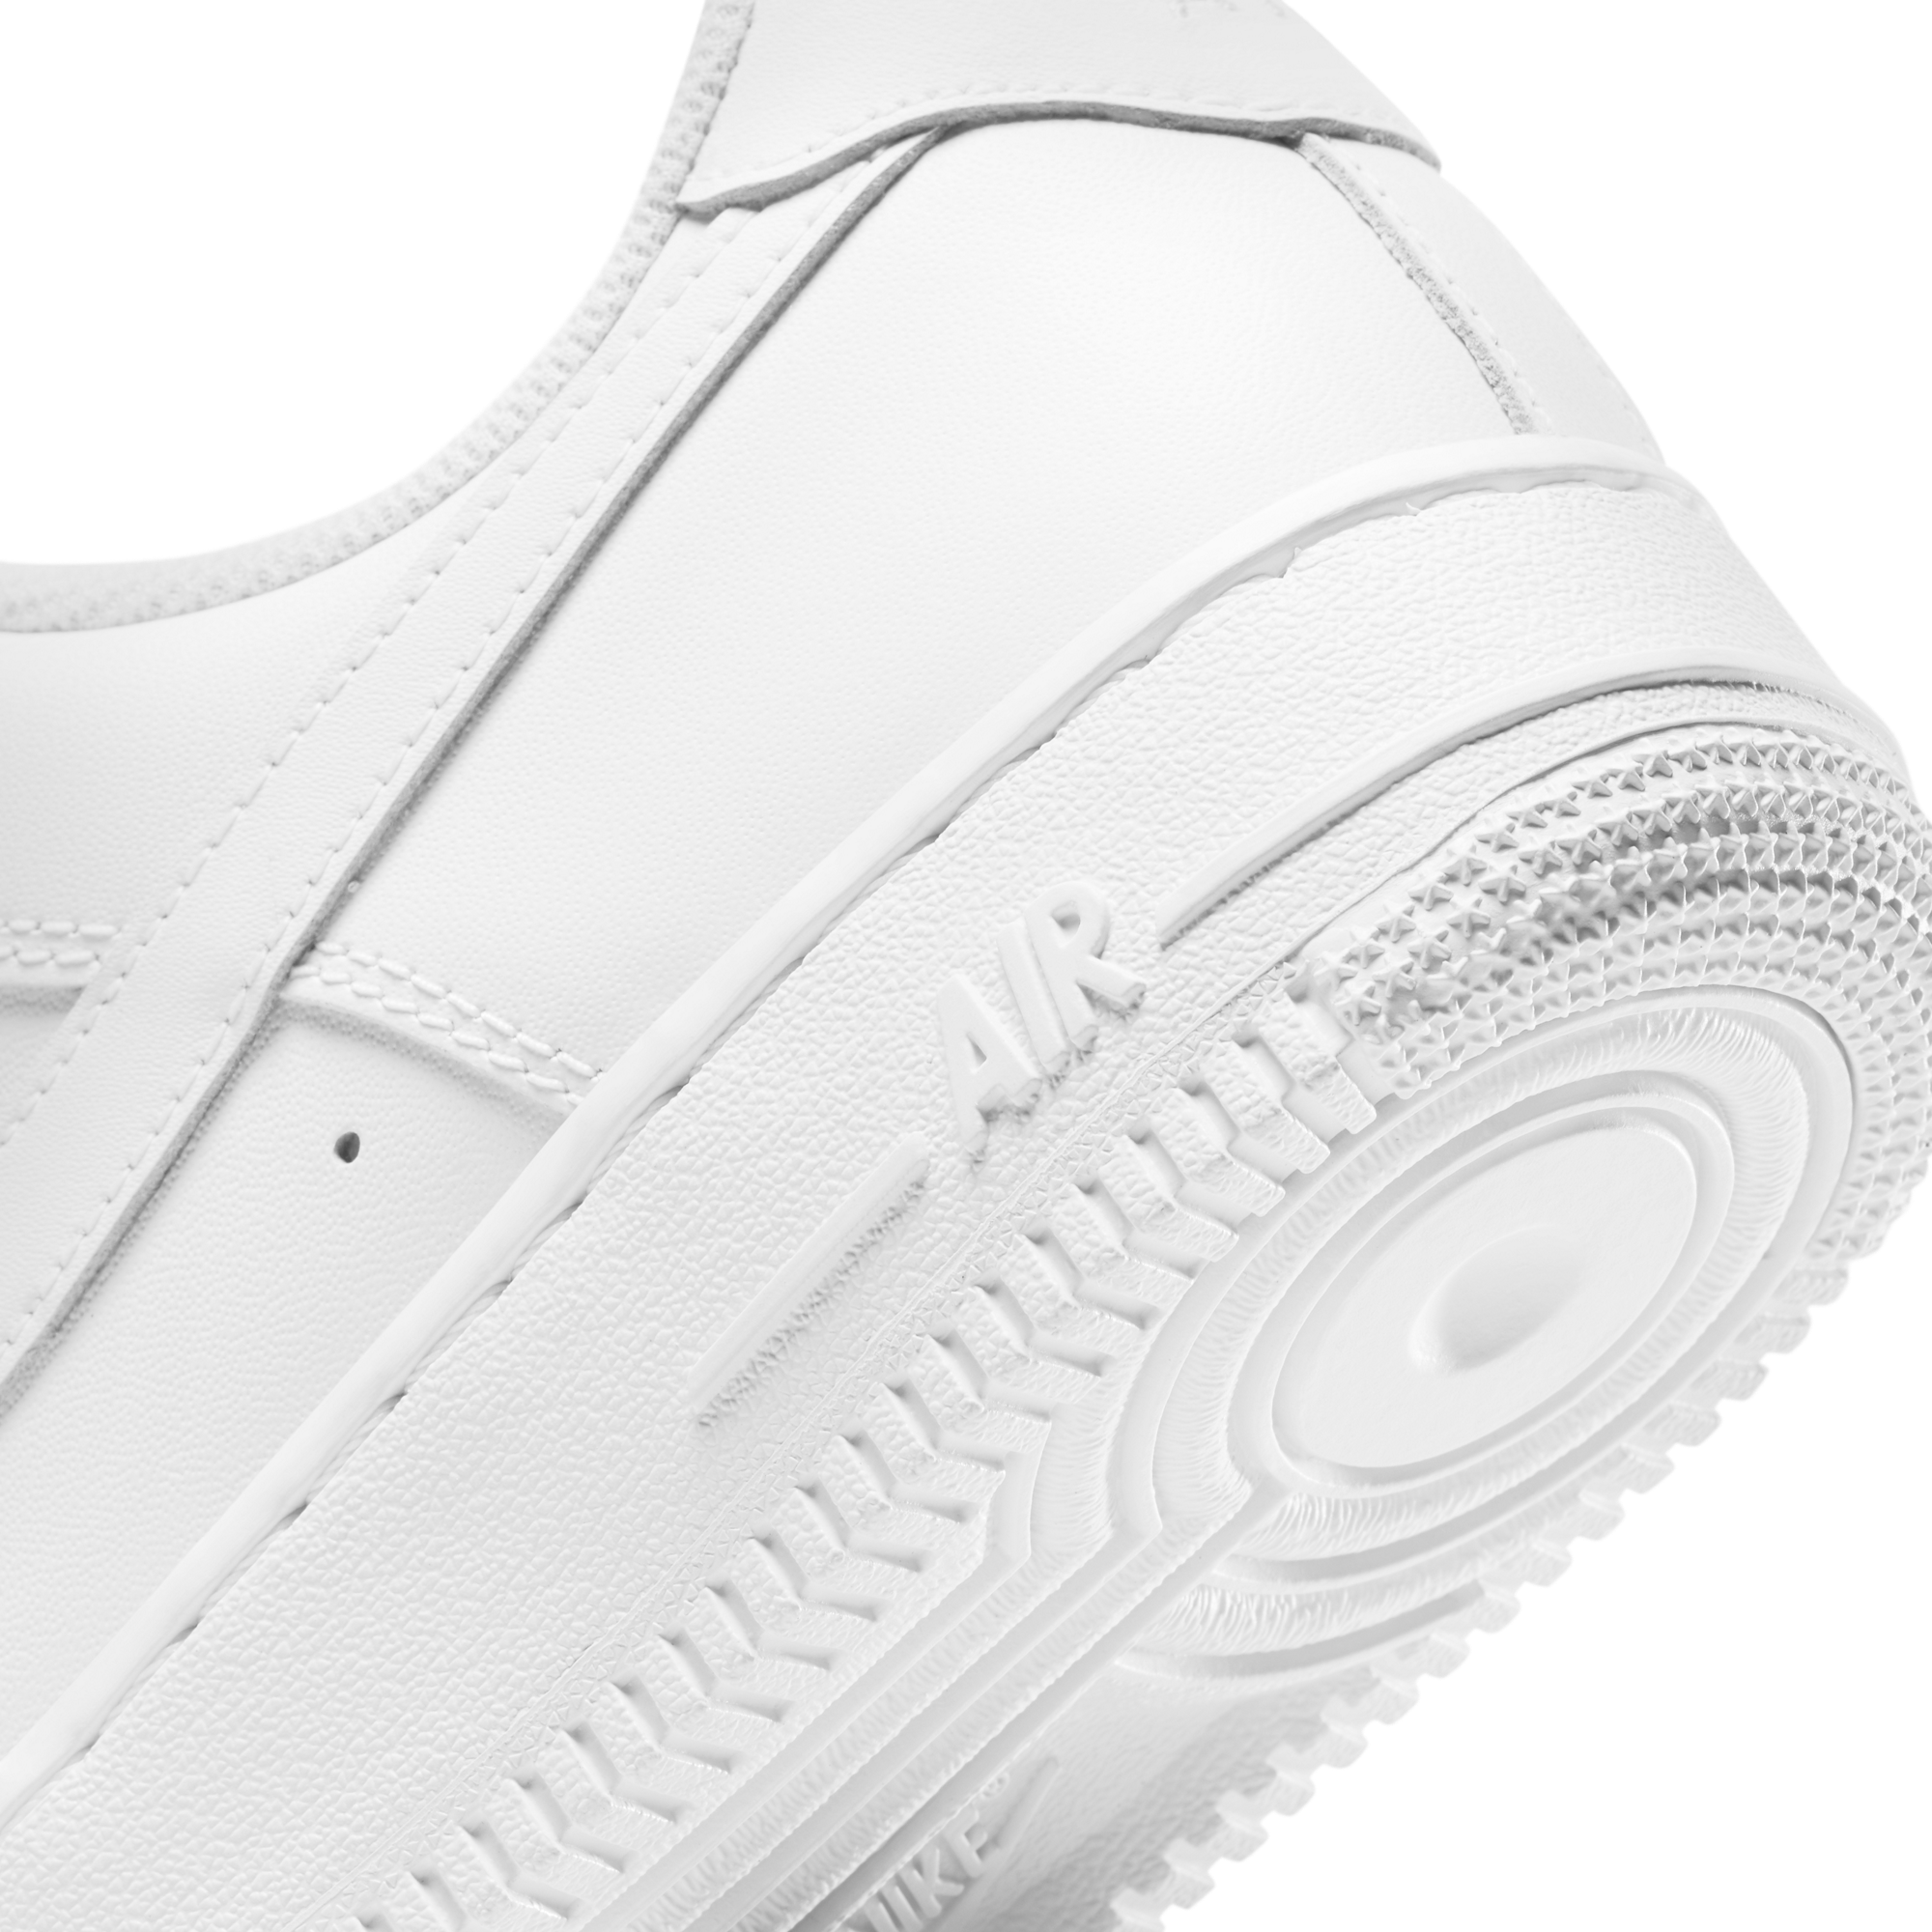 Nike Air Force 1 07 Womens Lifestyle Shoe White DD8959-100 – Shoe